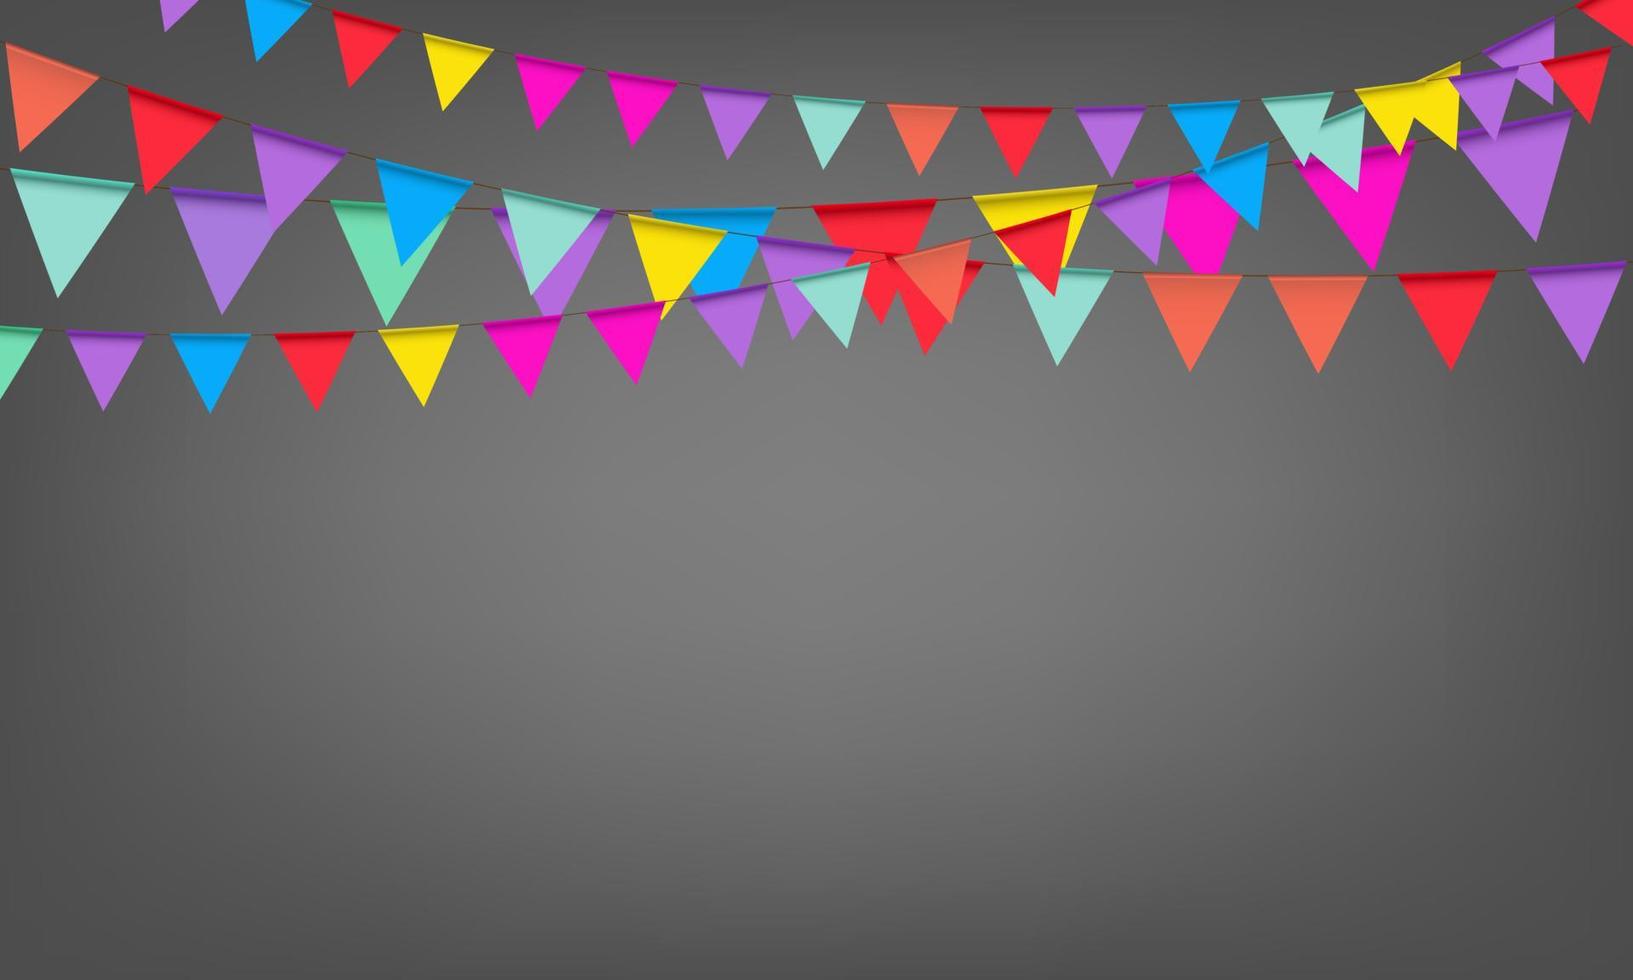 graphics festival flag for backdrop gray color tone background vector illustration